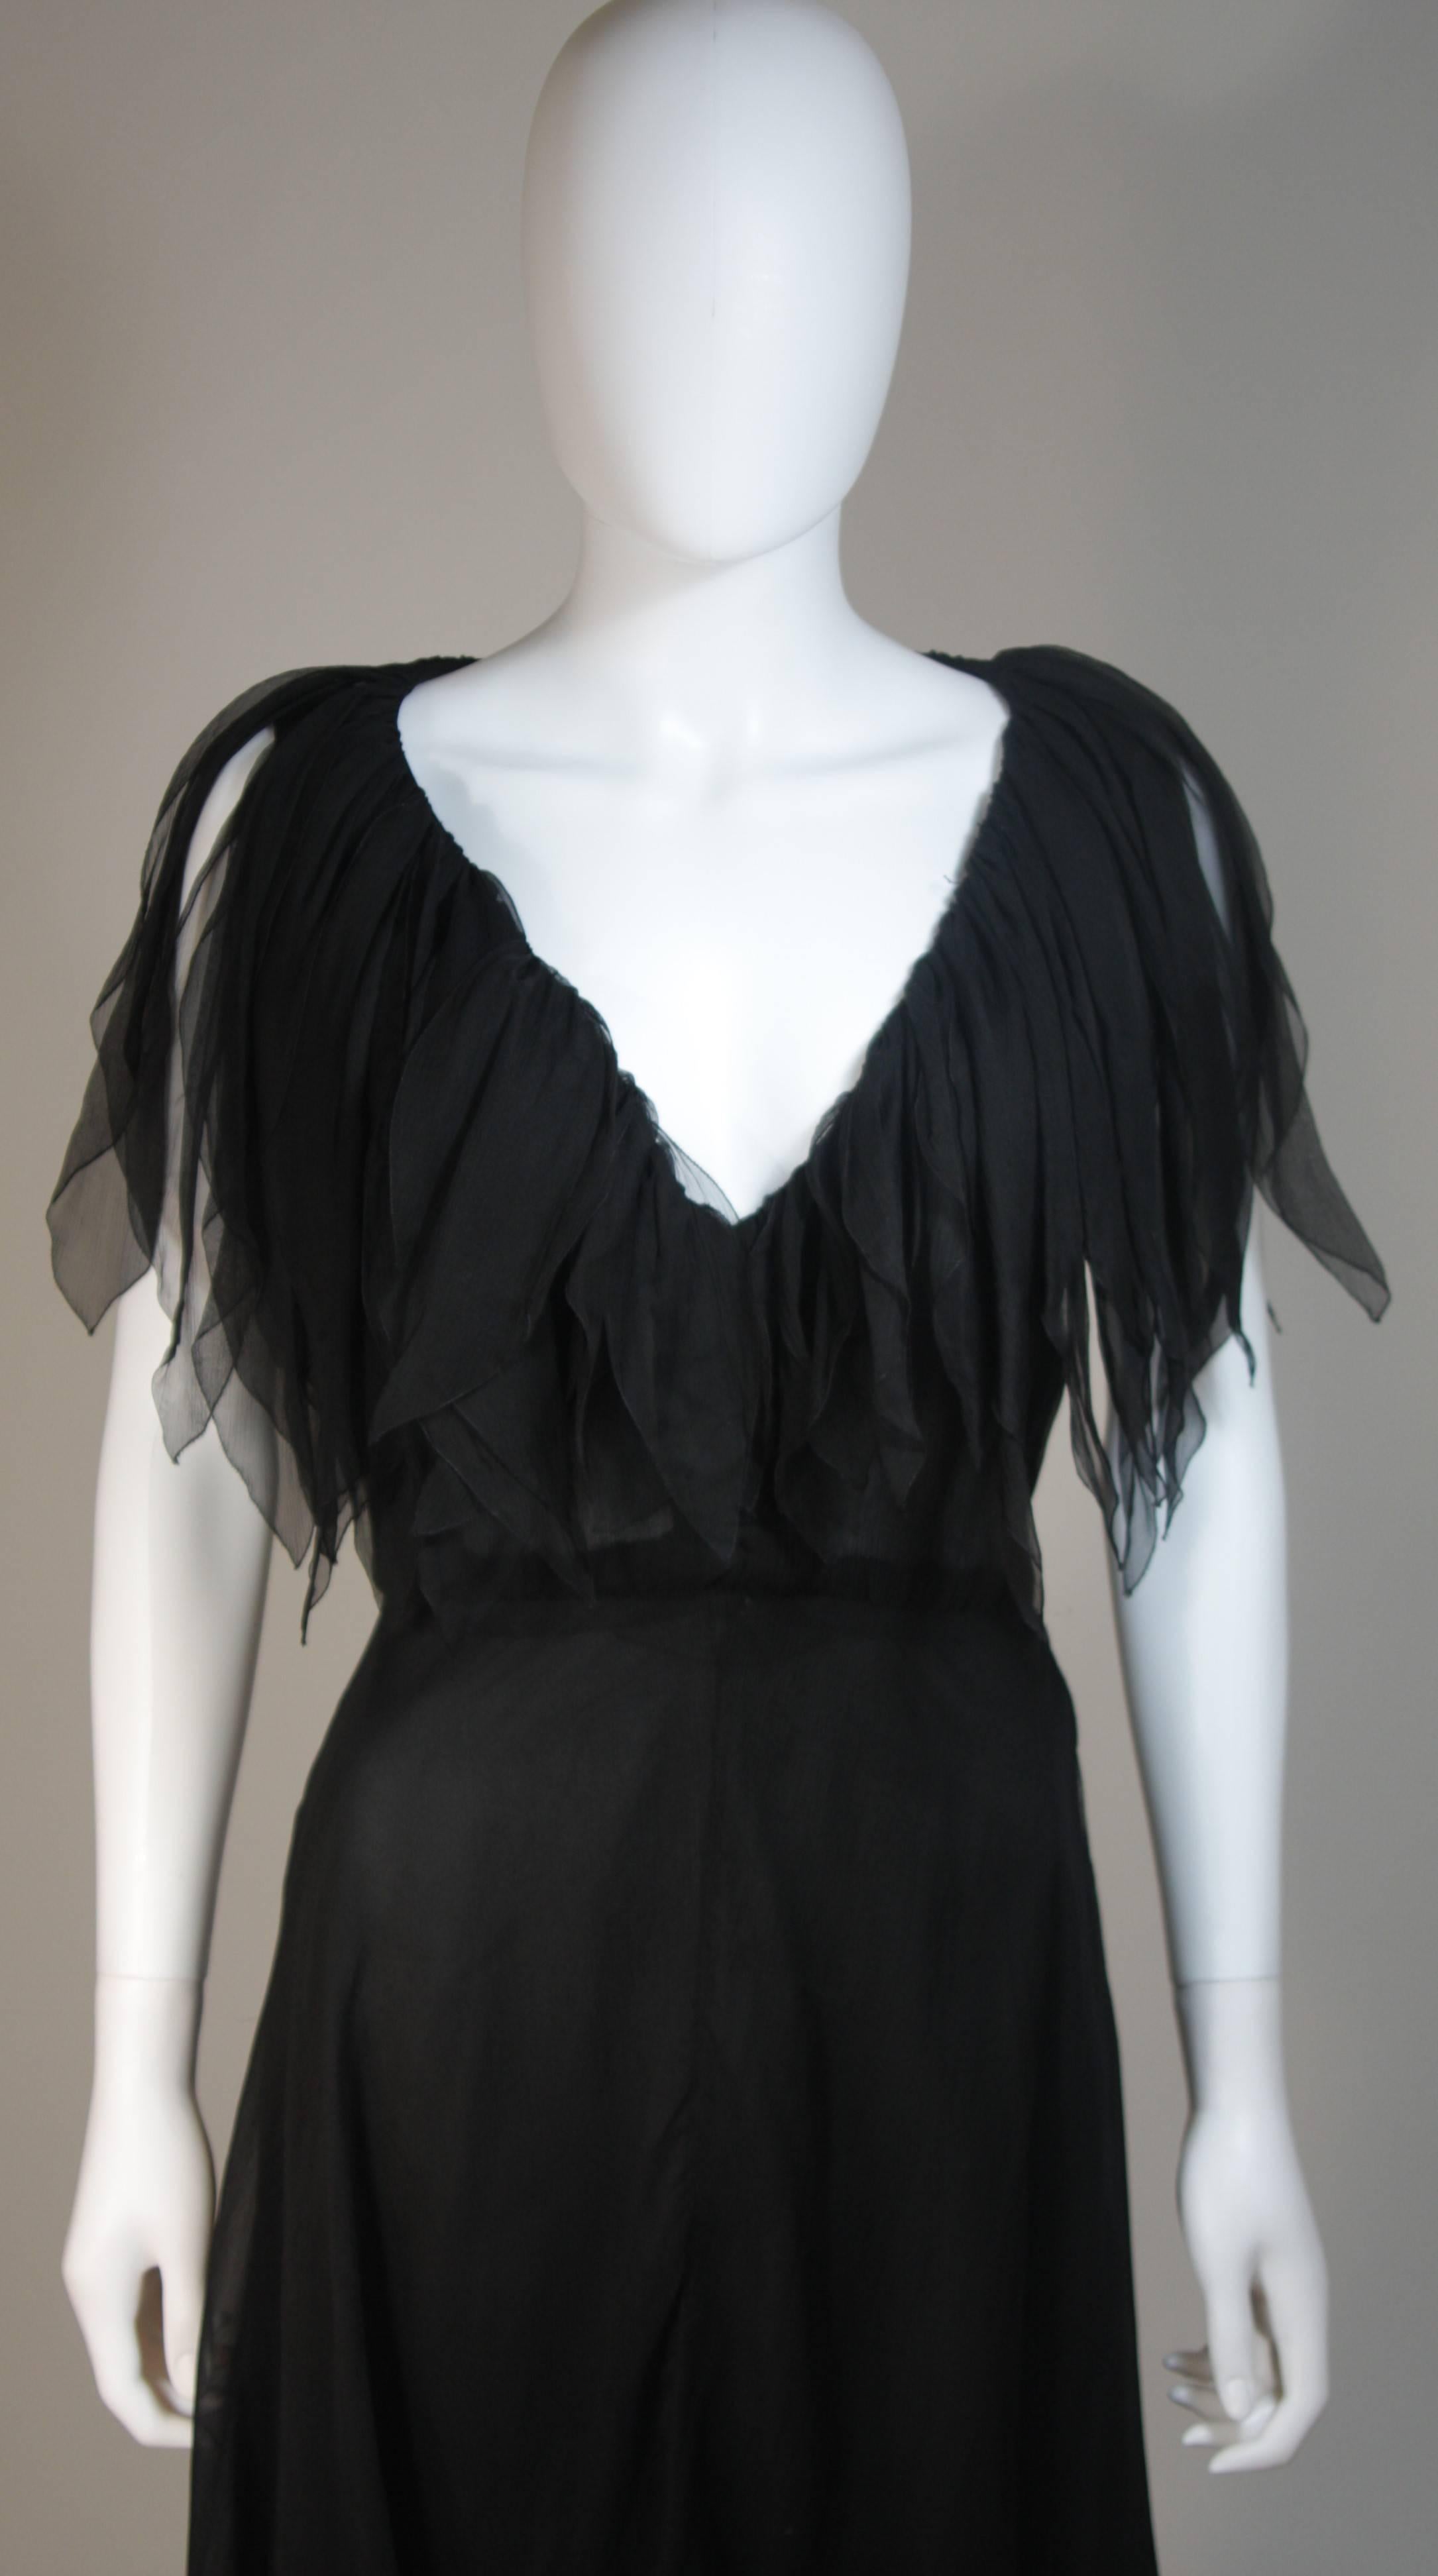 Women's CHRISTIAN DIOR COUTURE Layered Black Silk Chiffon Cocktail Dress Size 4-6